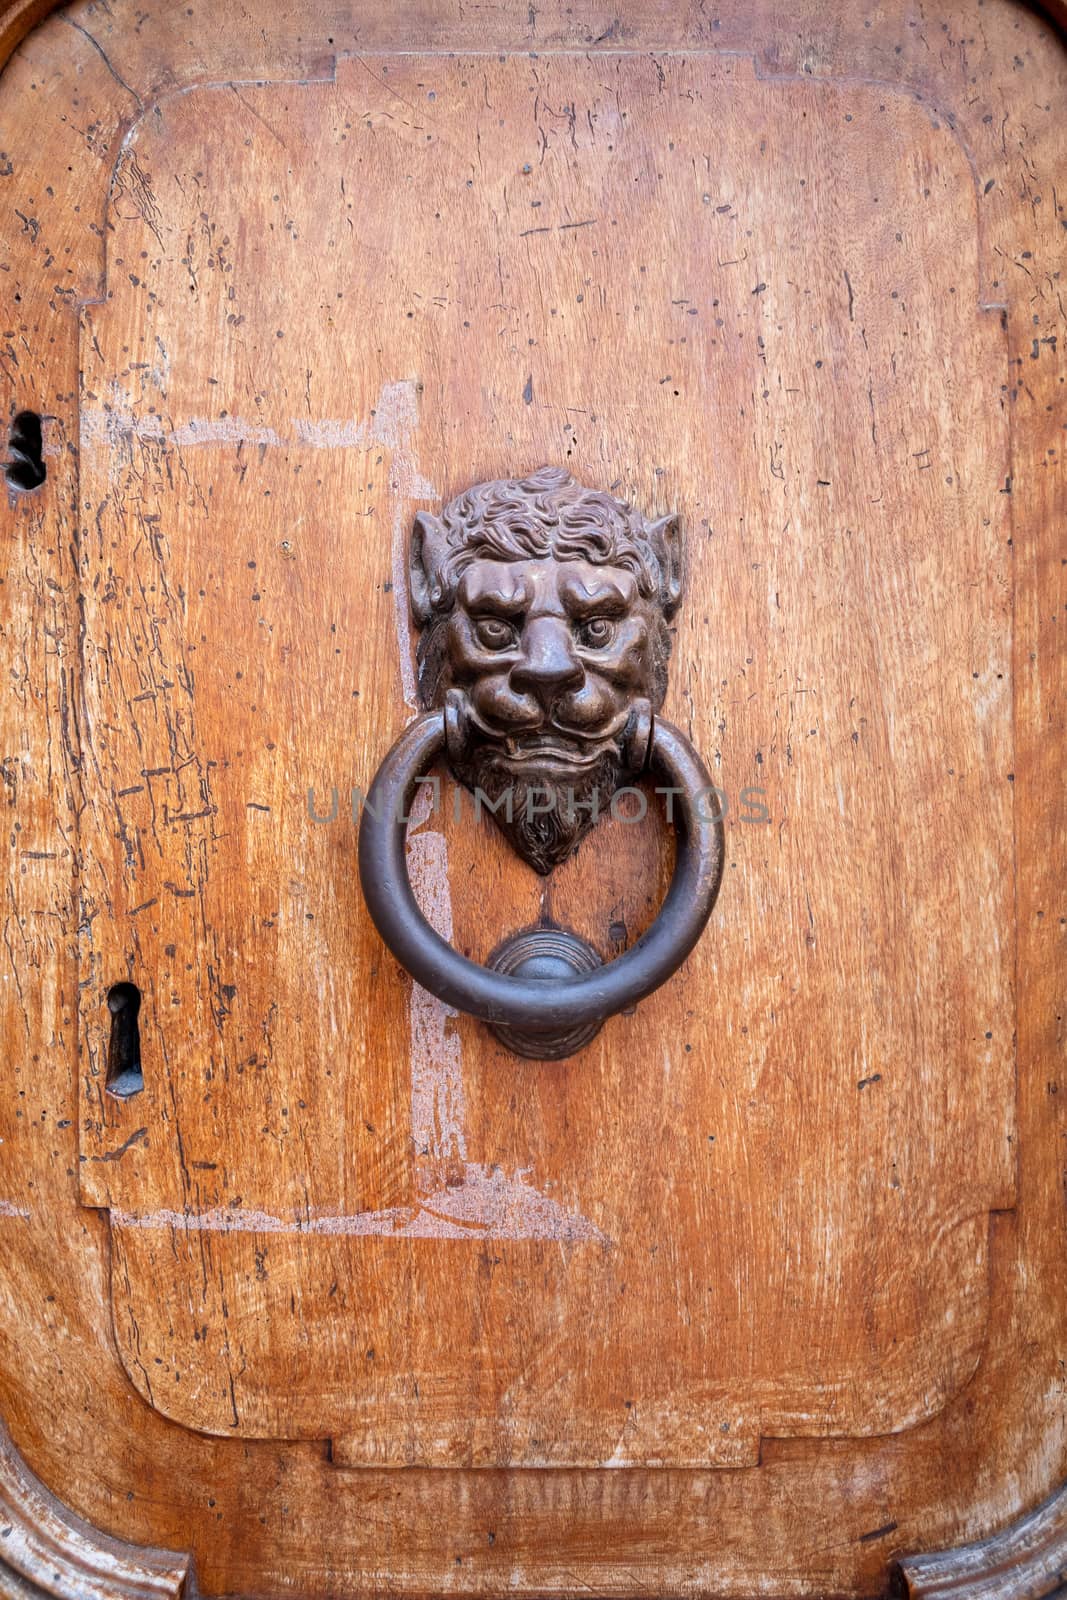 An image of an old wooden head door knob